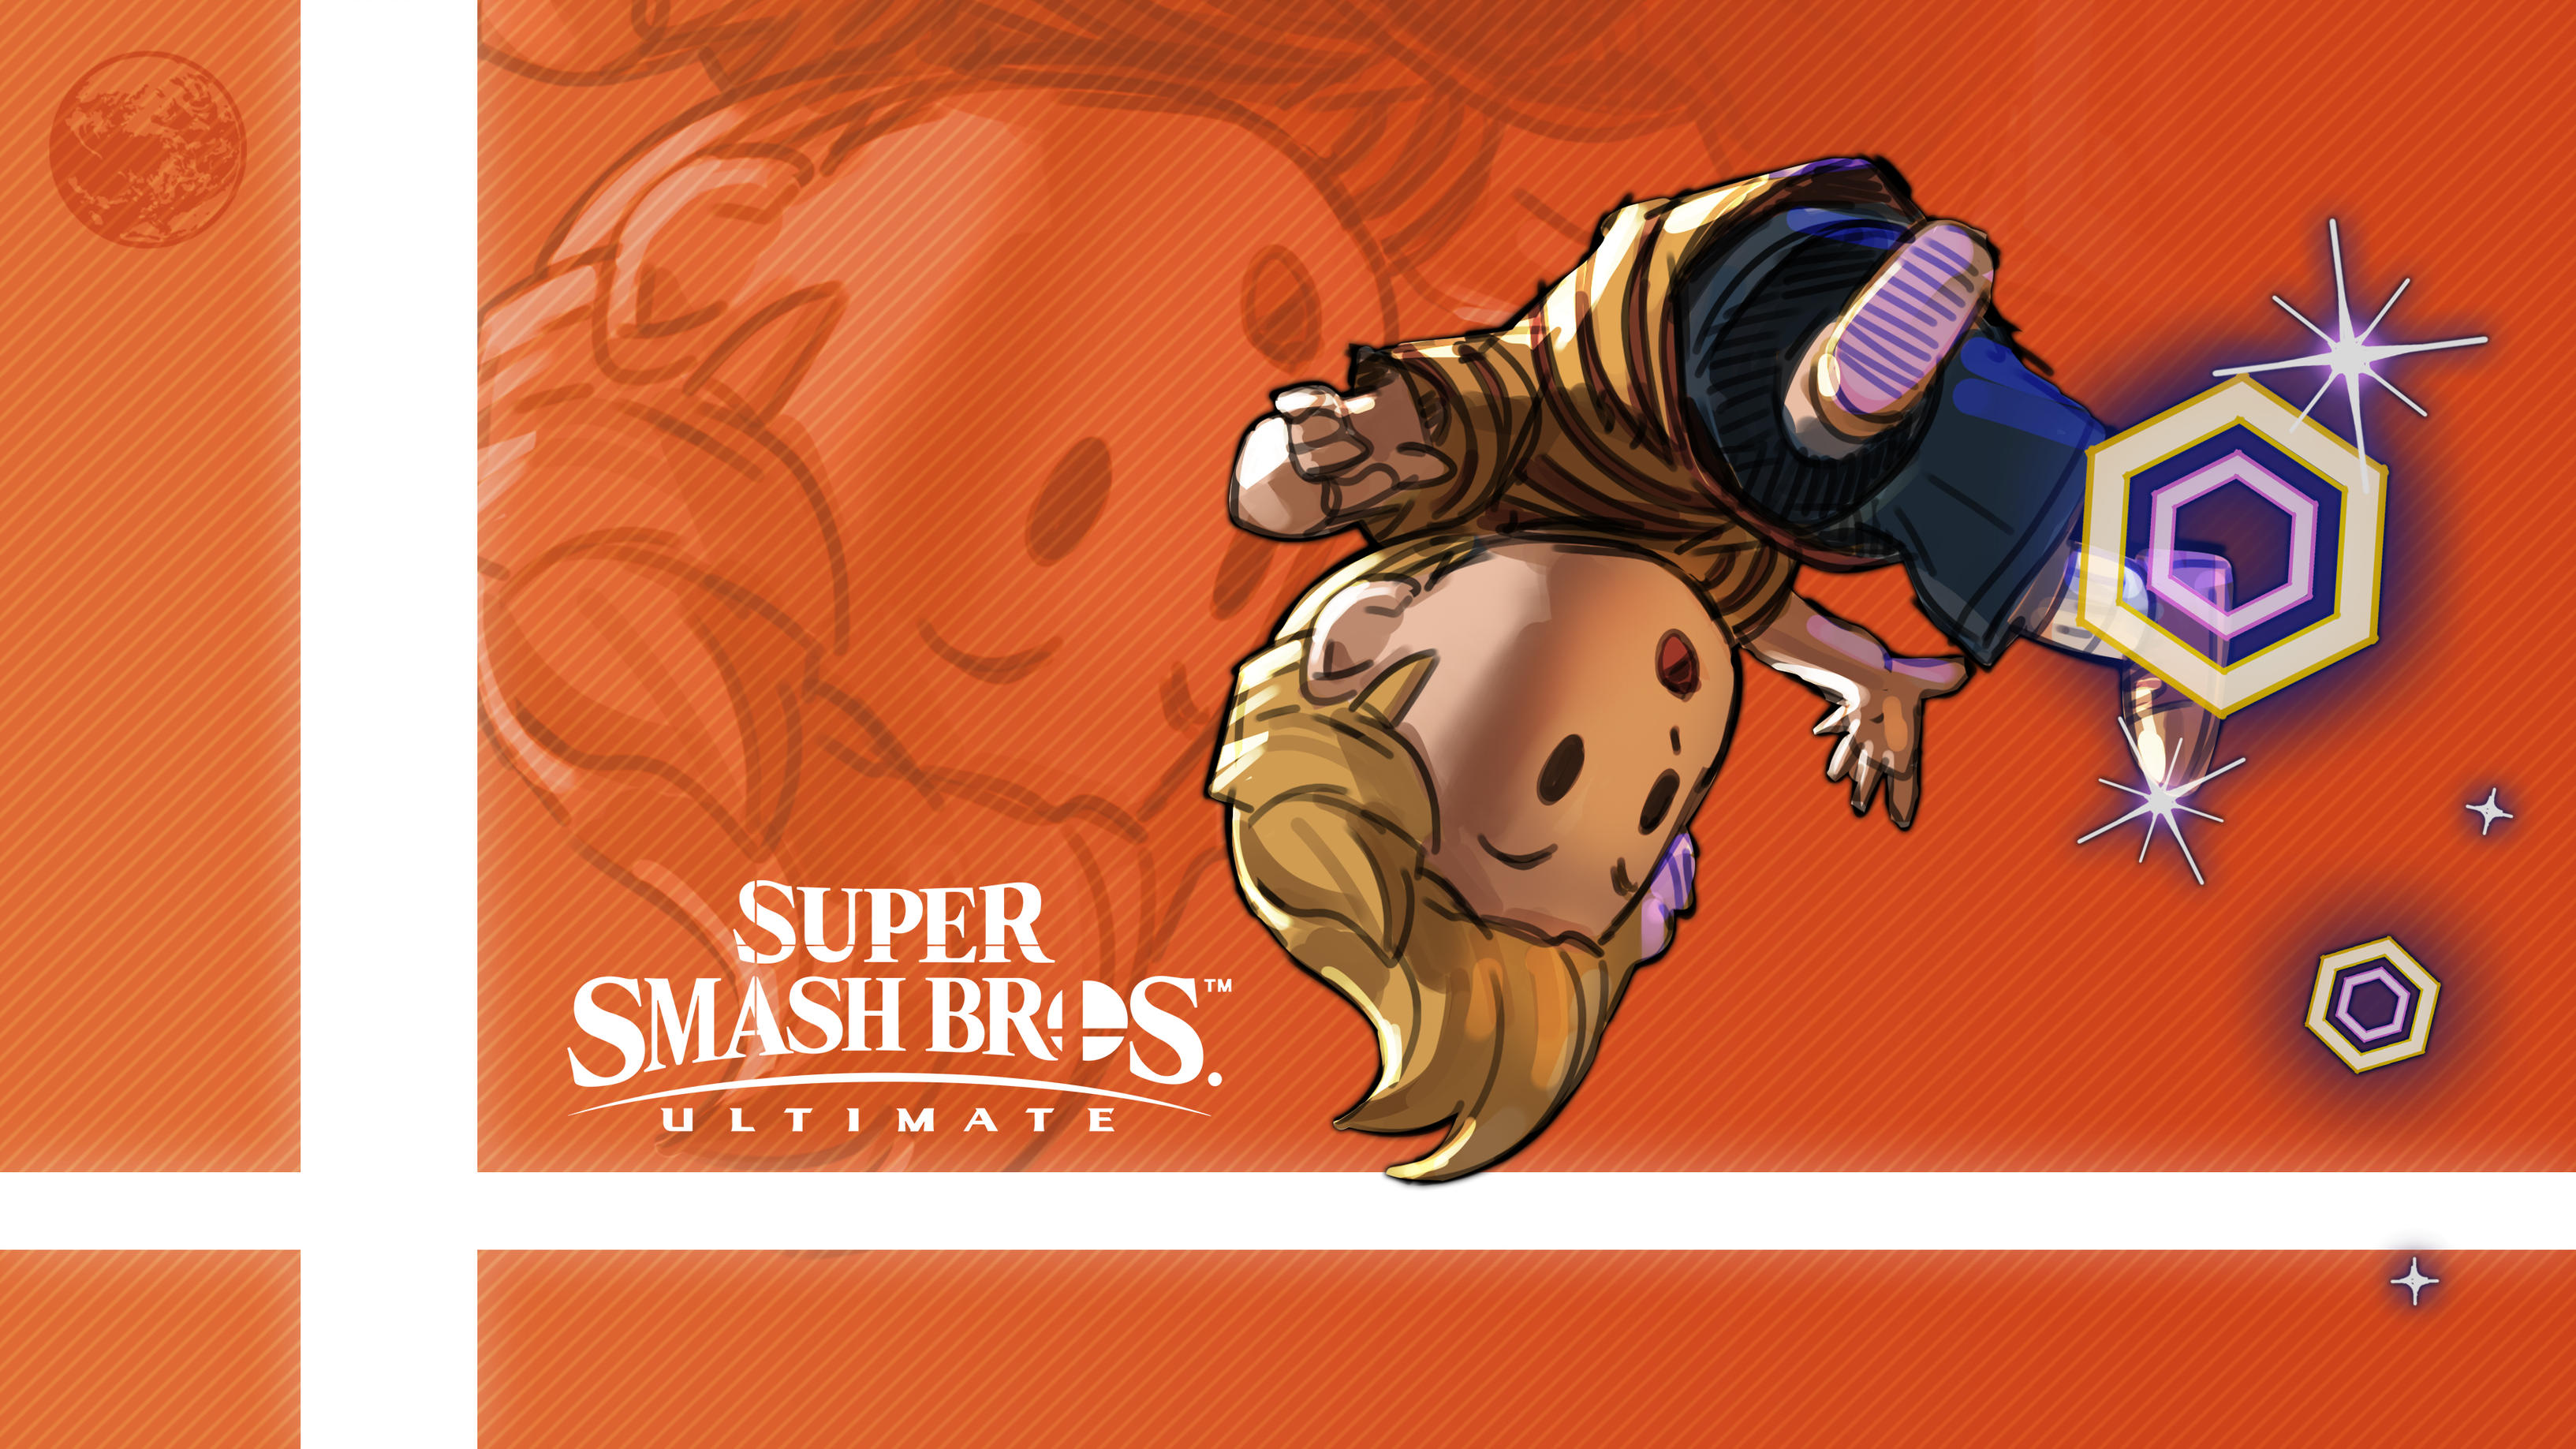 Lucas Mother Super Smash Bros Ultimate 3266x1837